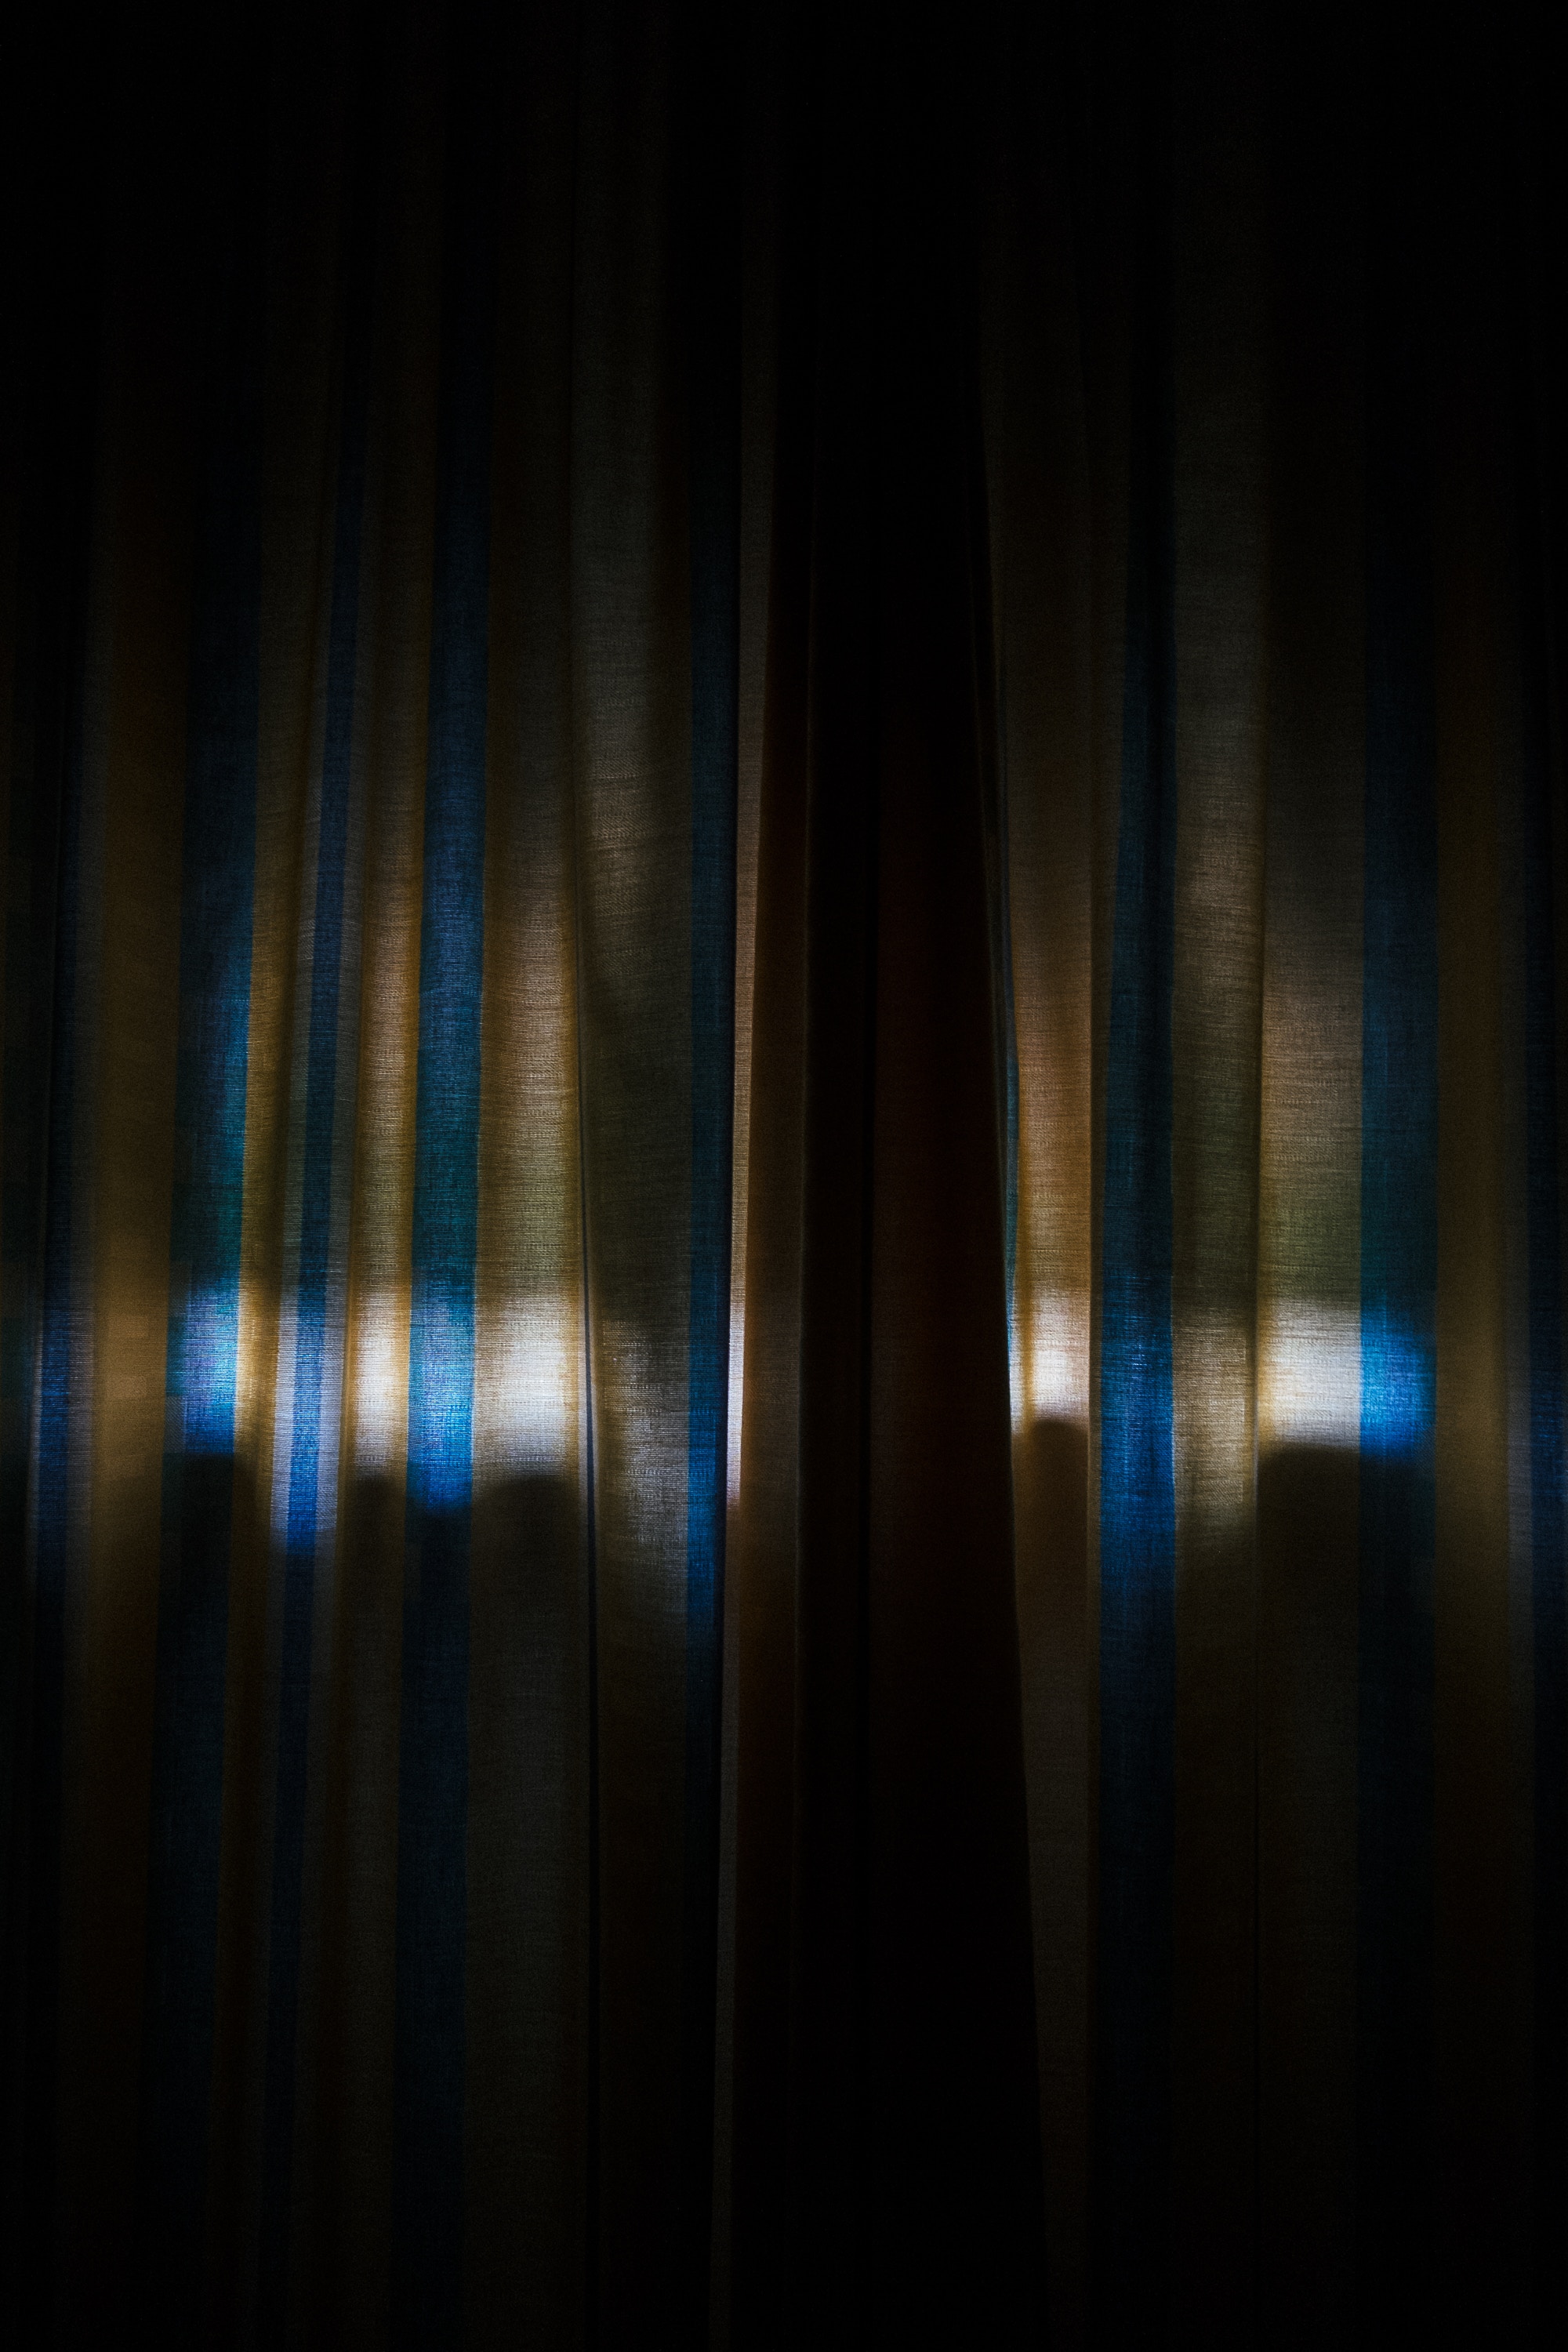 dark, curtains, shadow, window, curtain